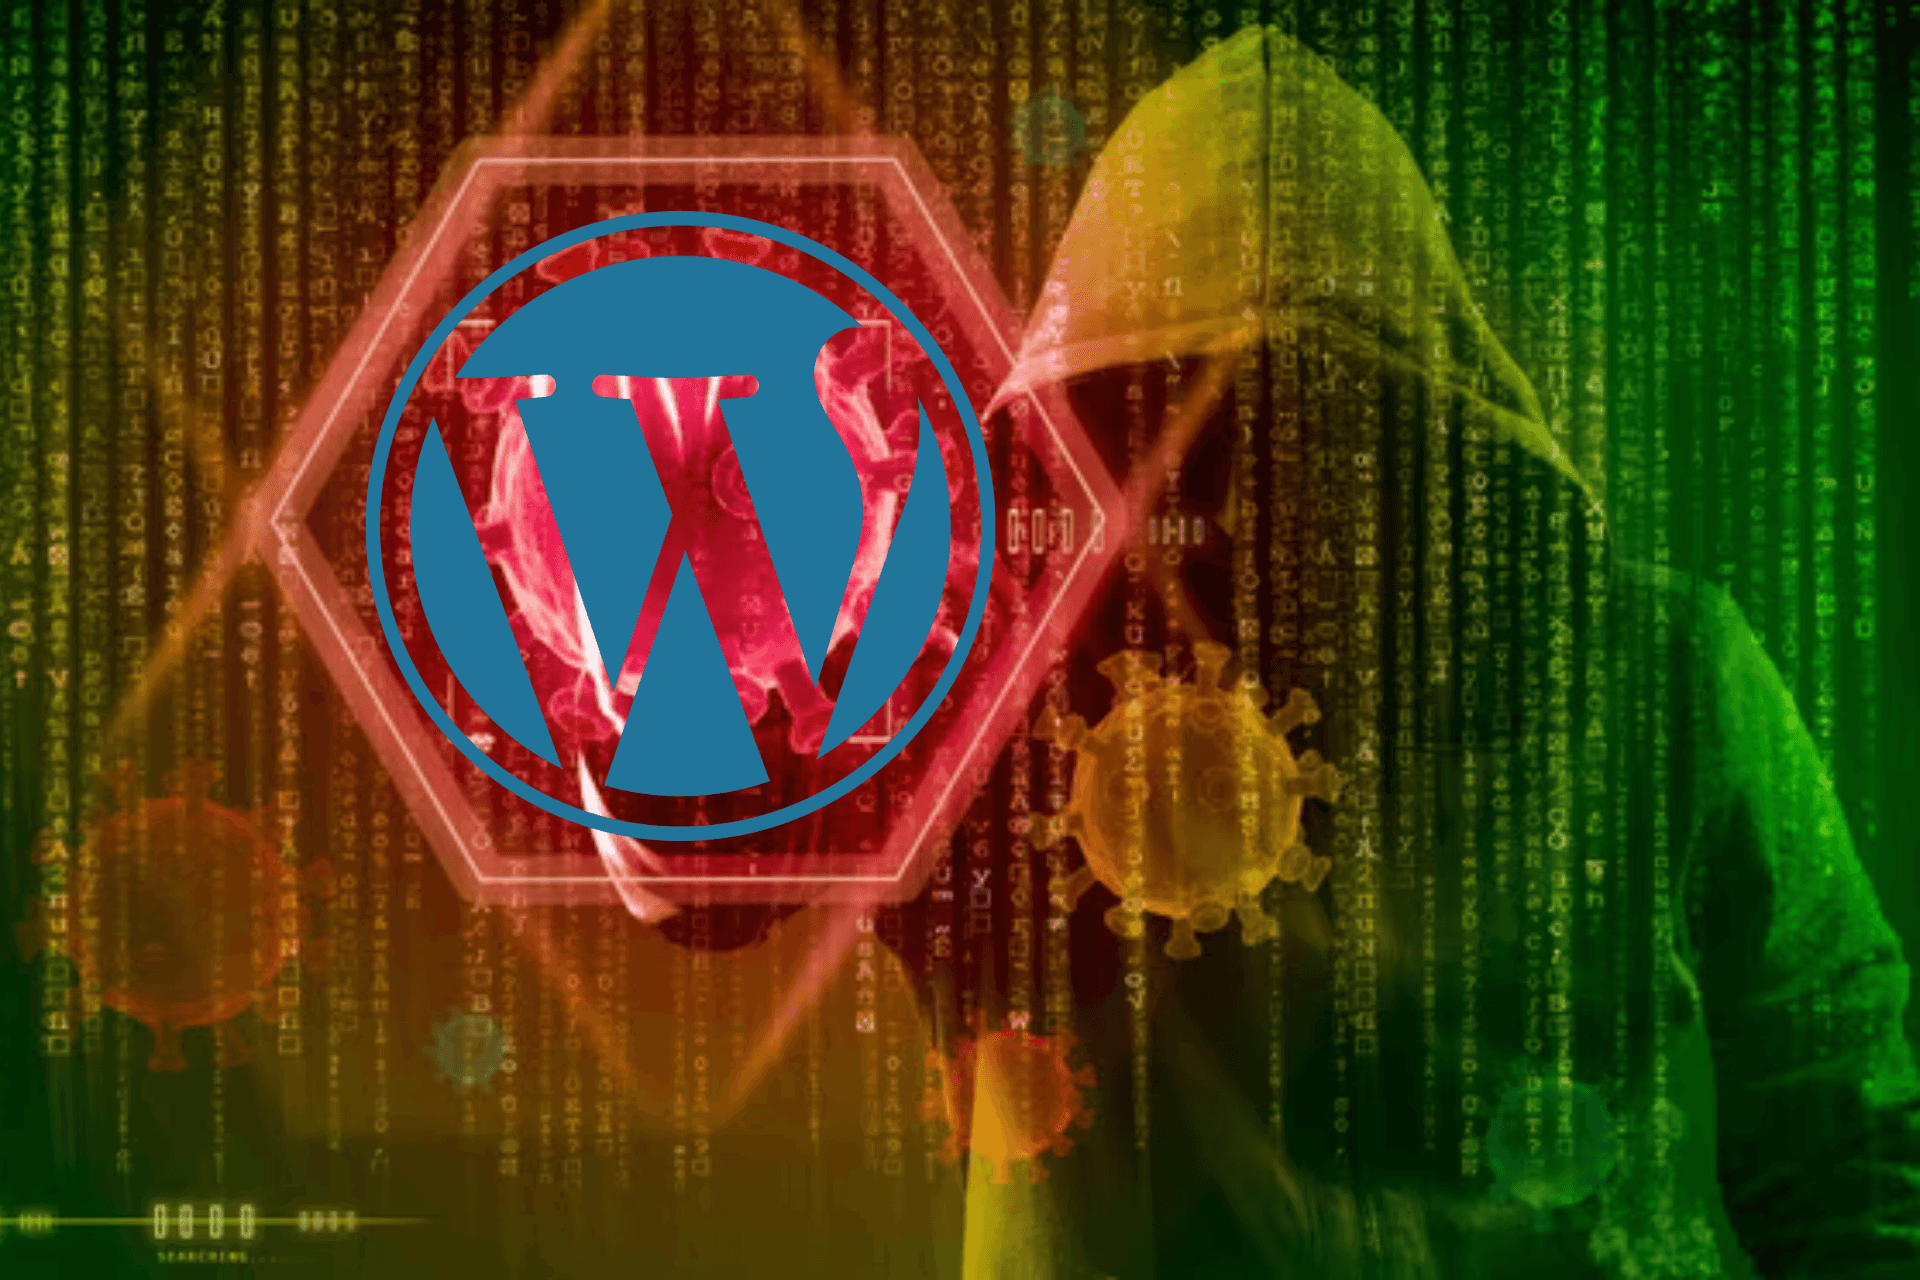 WordPress plugin vulnerability exploited: 3,300 sites compromised so far